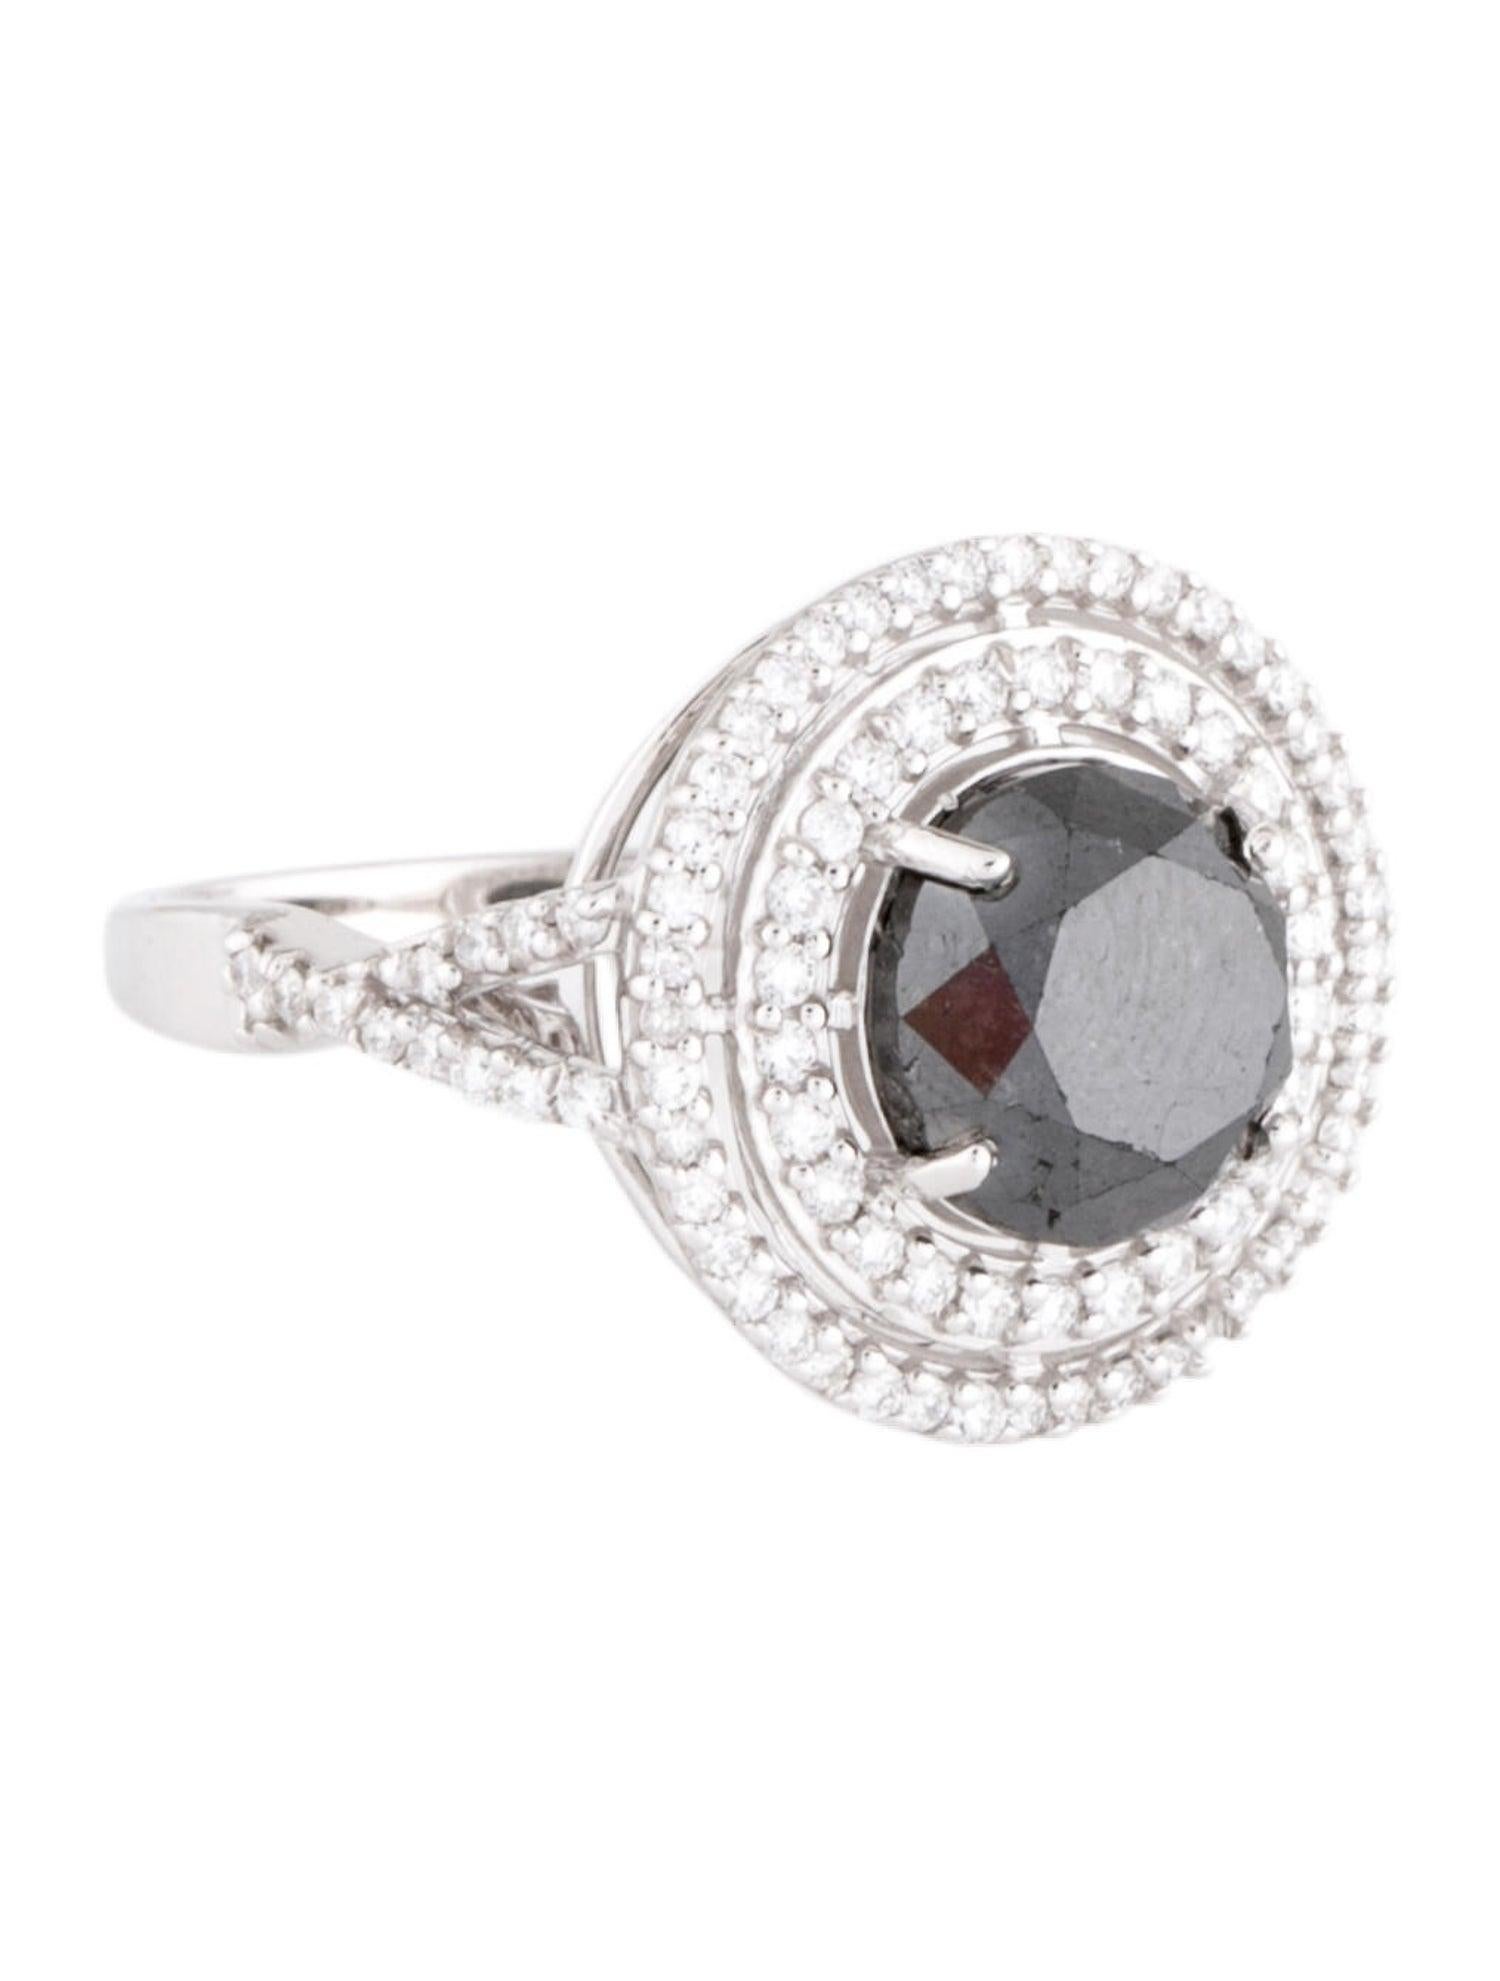 Women's Elegant 3.67ct Diamond Engagement Ring, Size 7 - Stunning Statement Jewelry For Sale